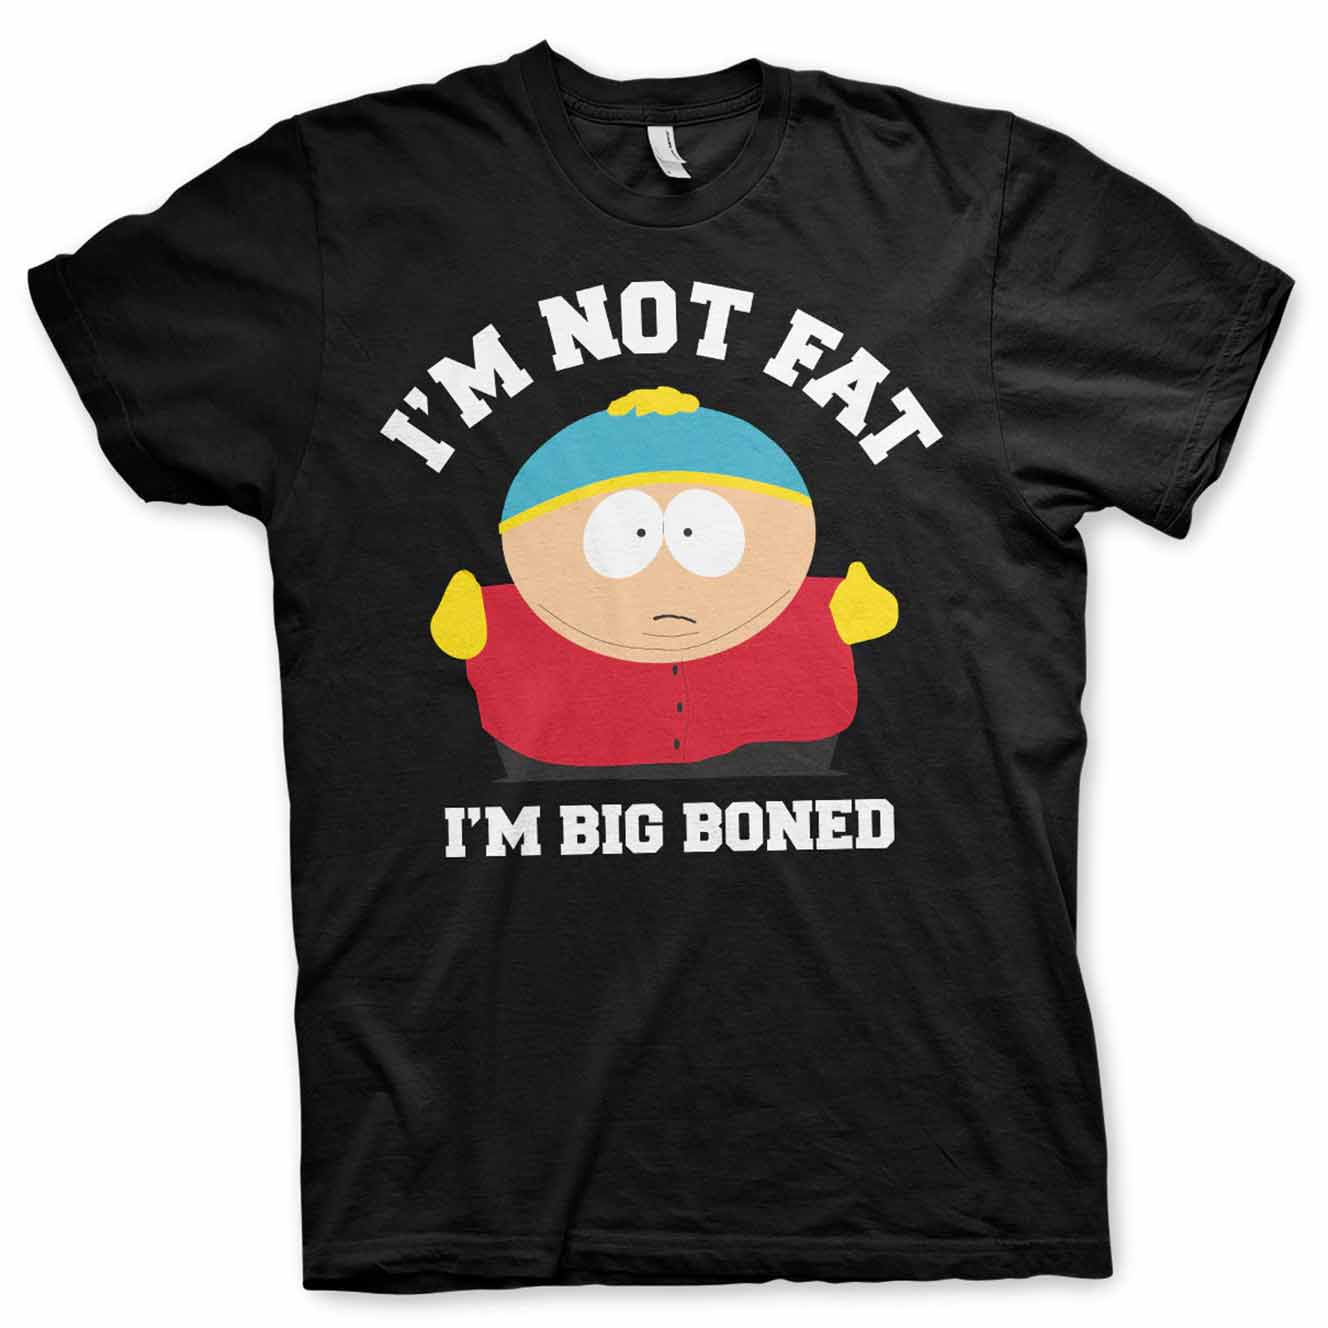 Sort South Park T-shirt med Cartman der siger I'm not fat i'm big boned